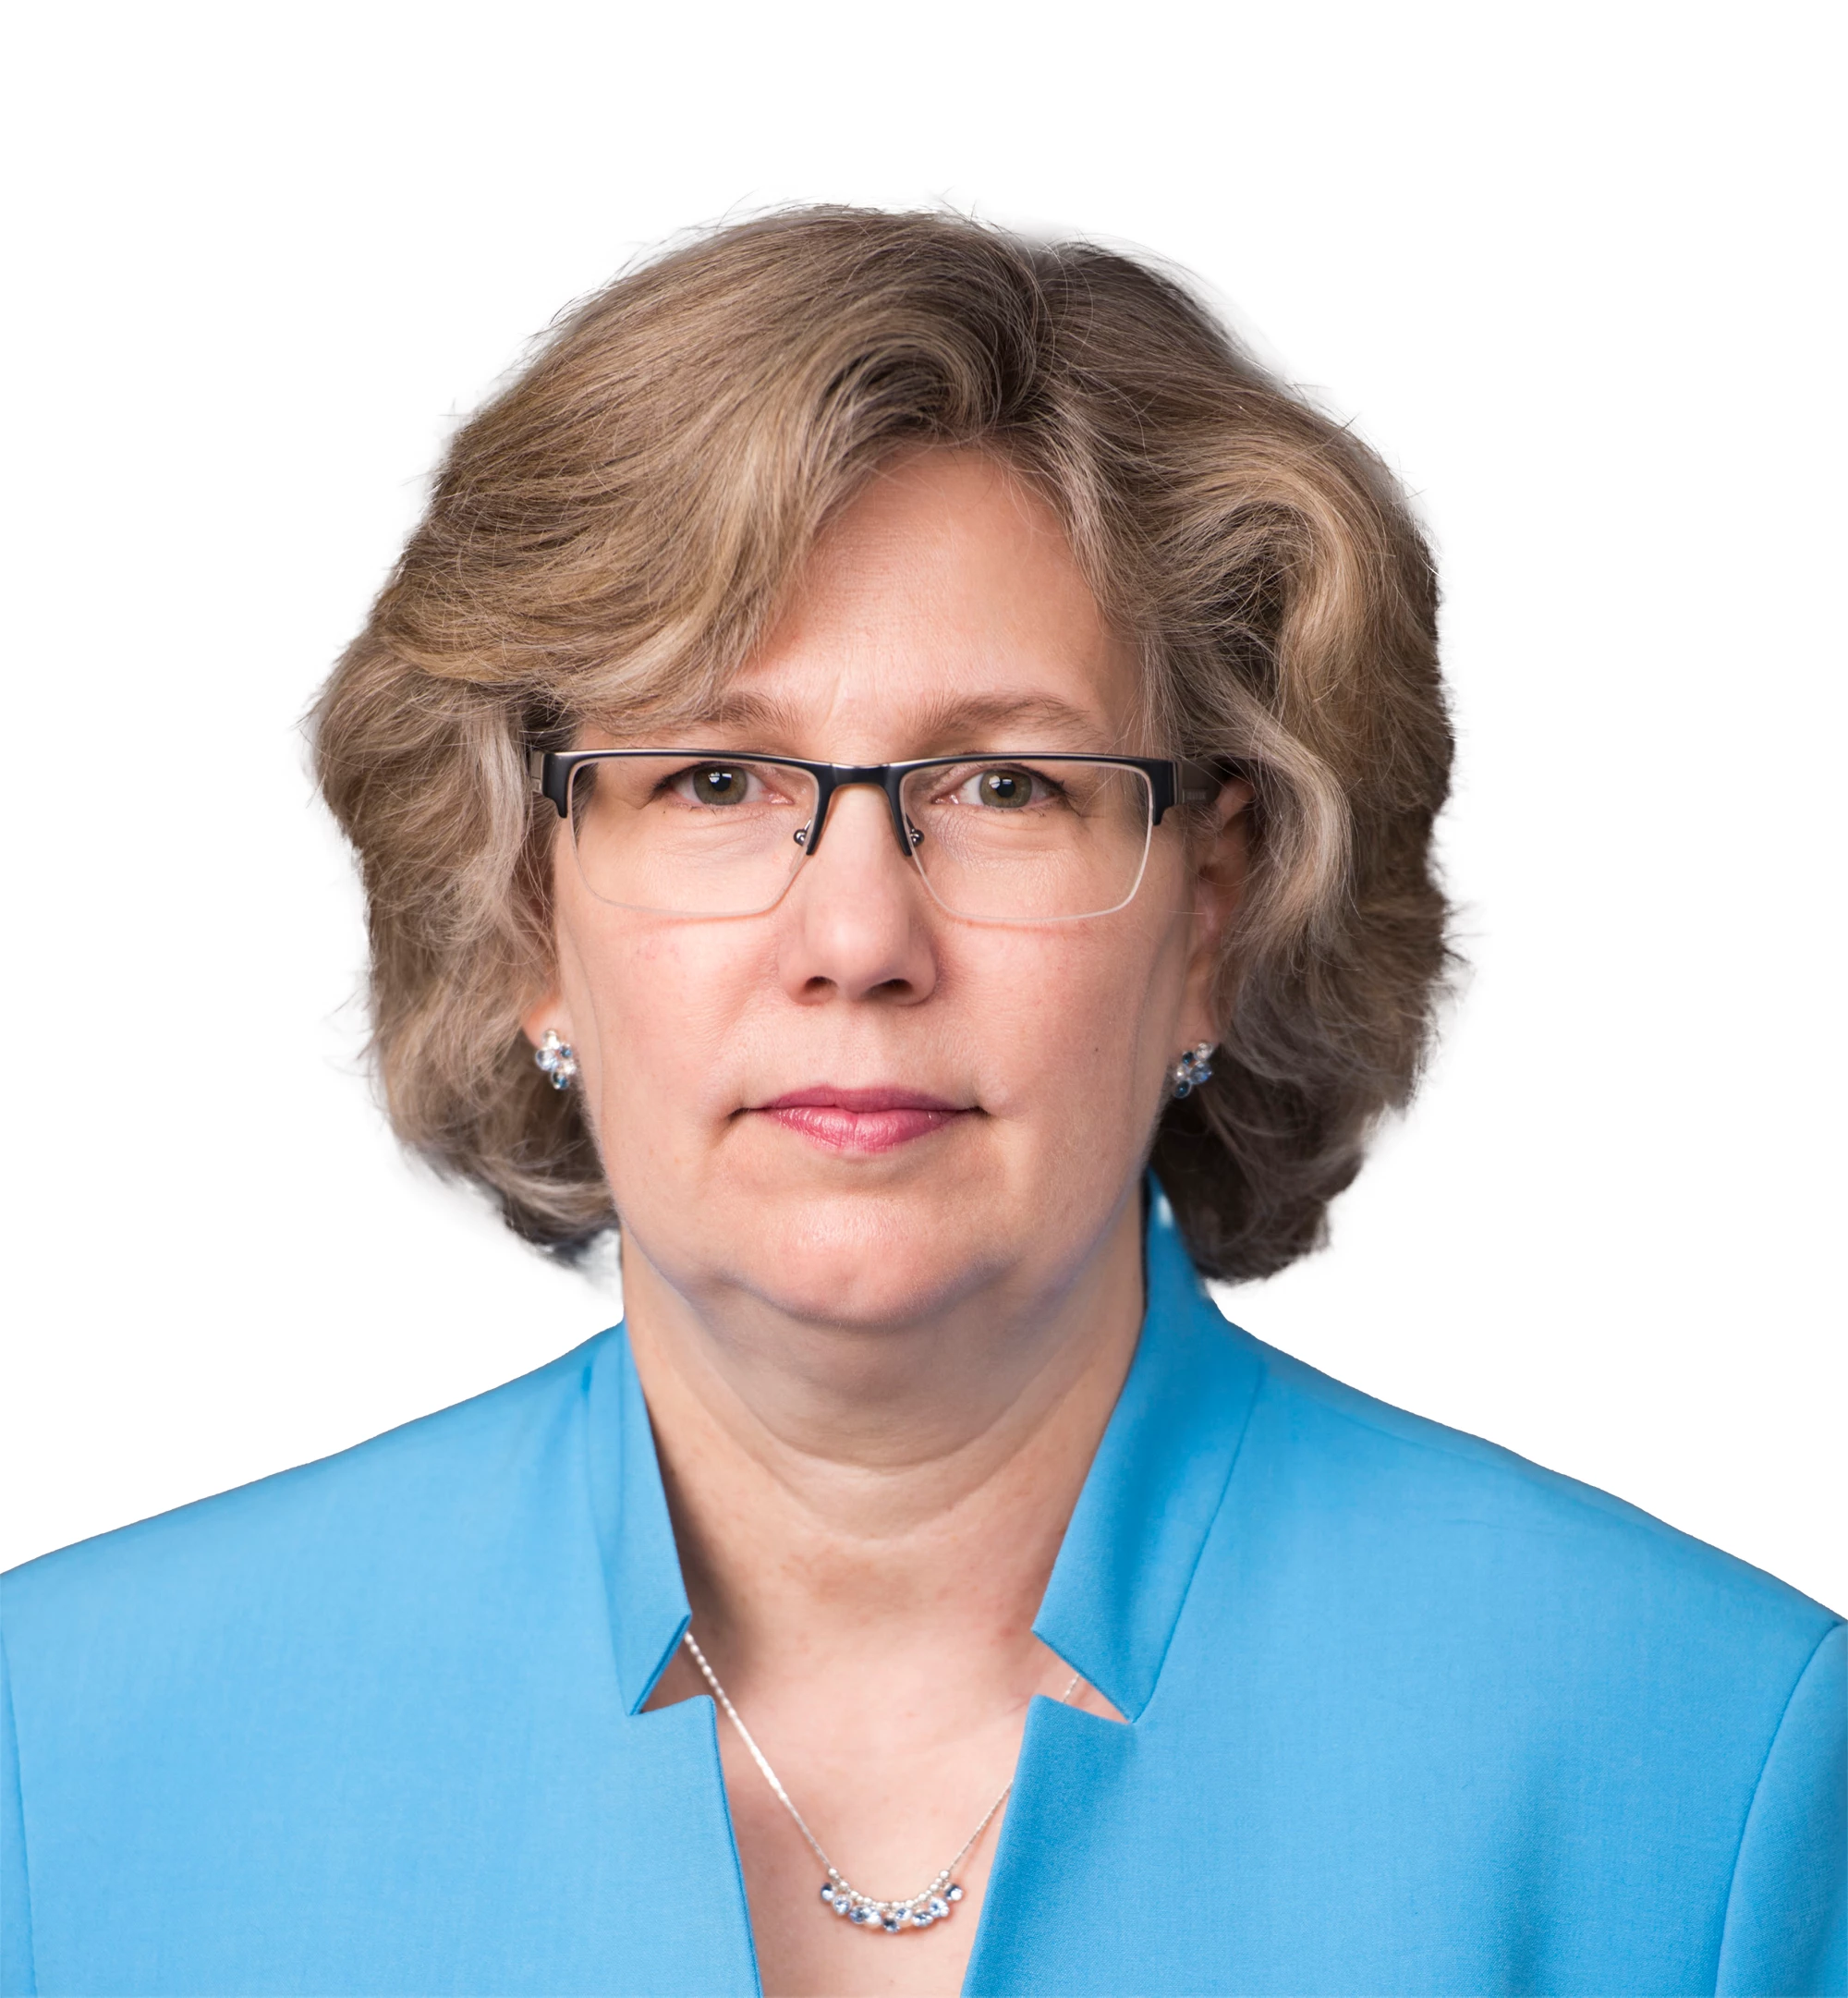 Margaret Grosh is the Senior Advisor of Social Protection and Jobs Global Practice